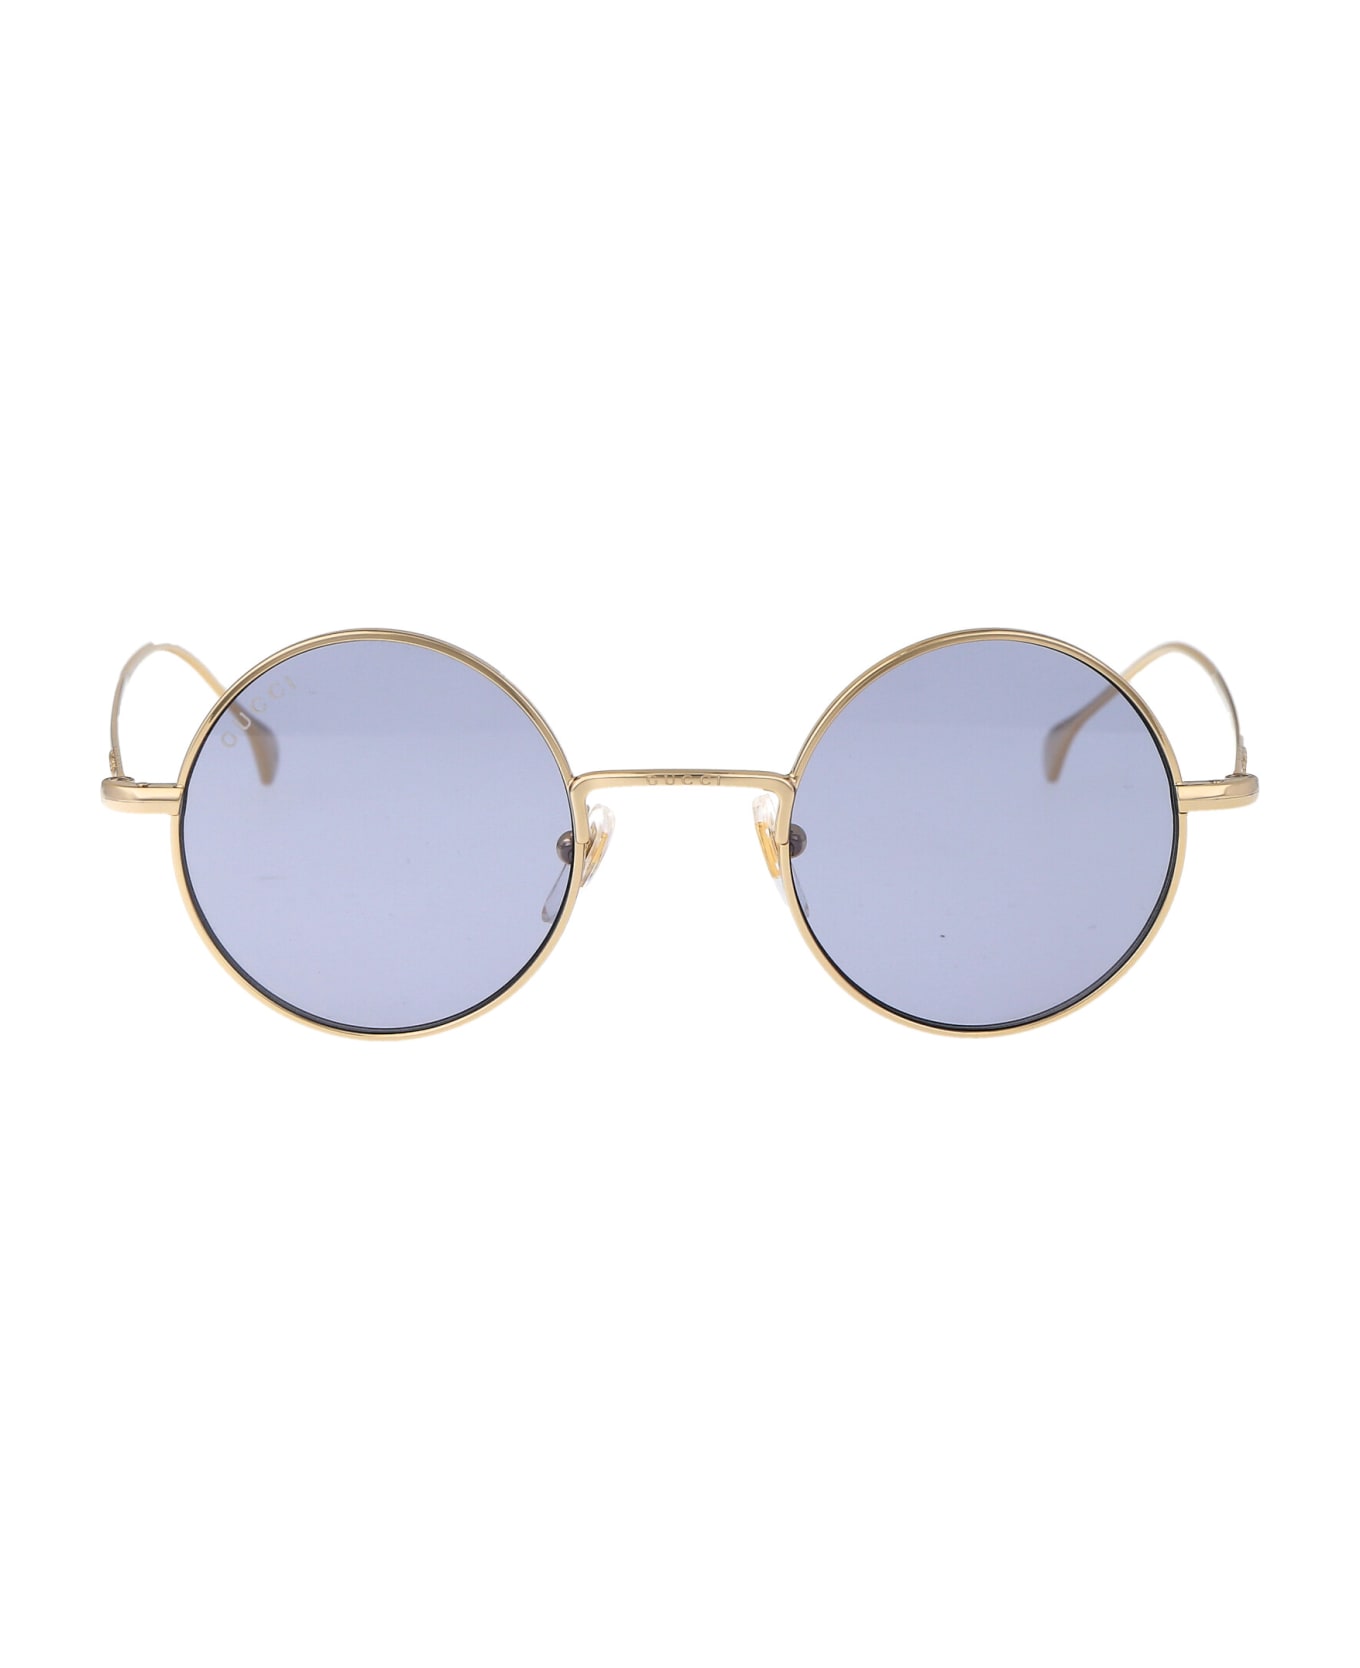 Gucci Eyewear Gg1649s Sunglasses - 006 GOLD GOLD VIOLET サングラス